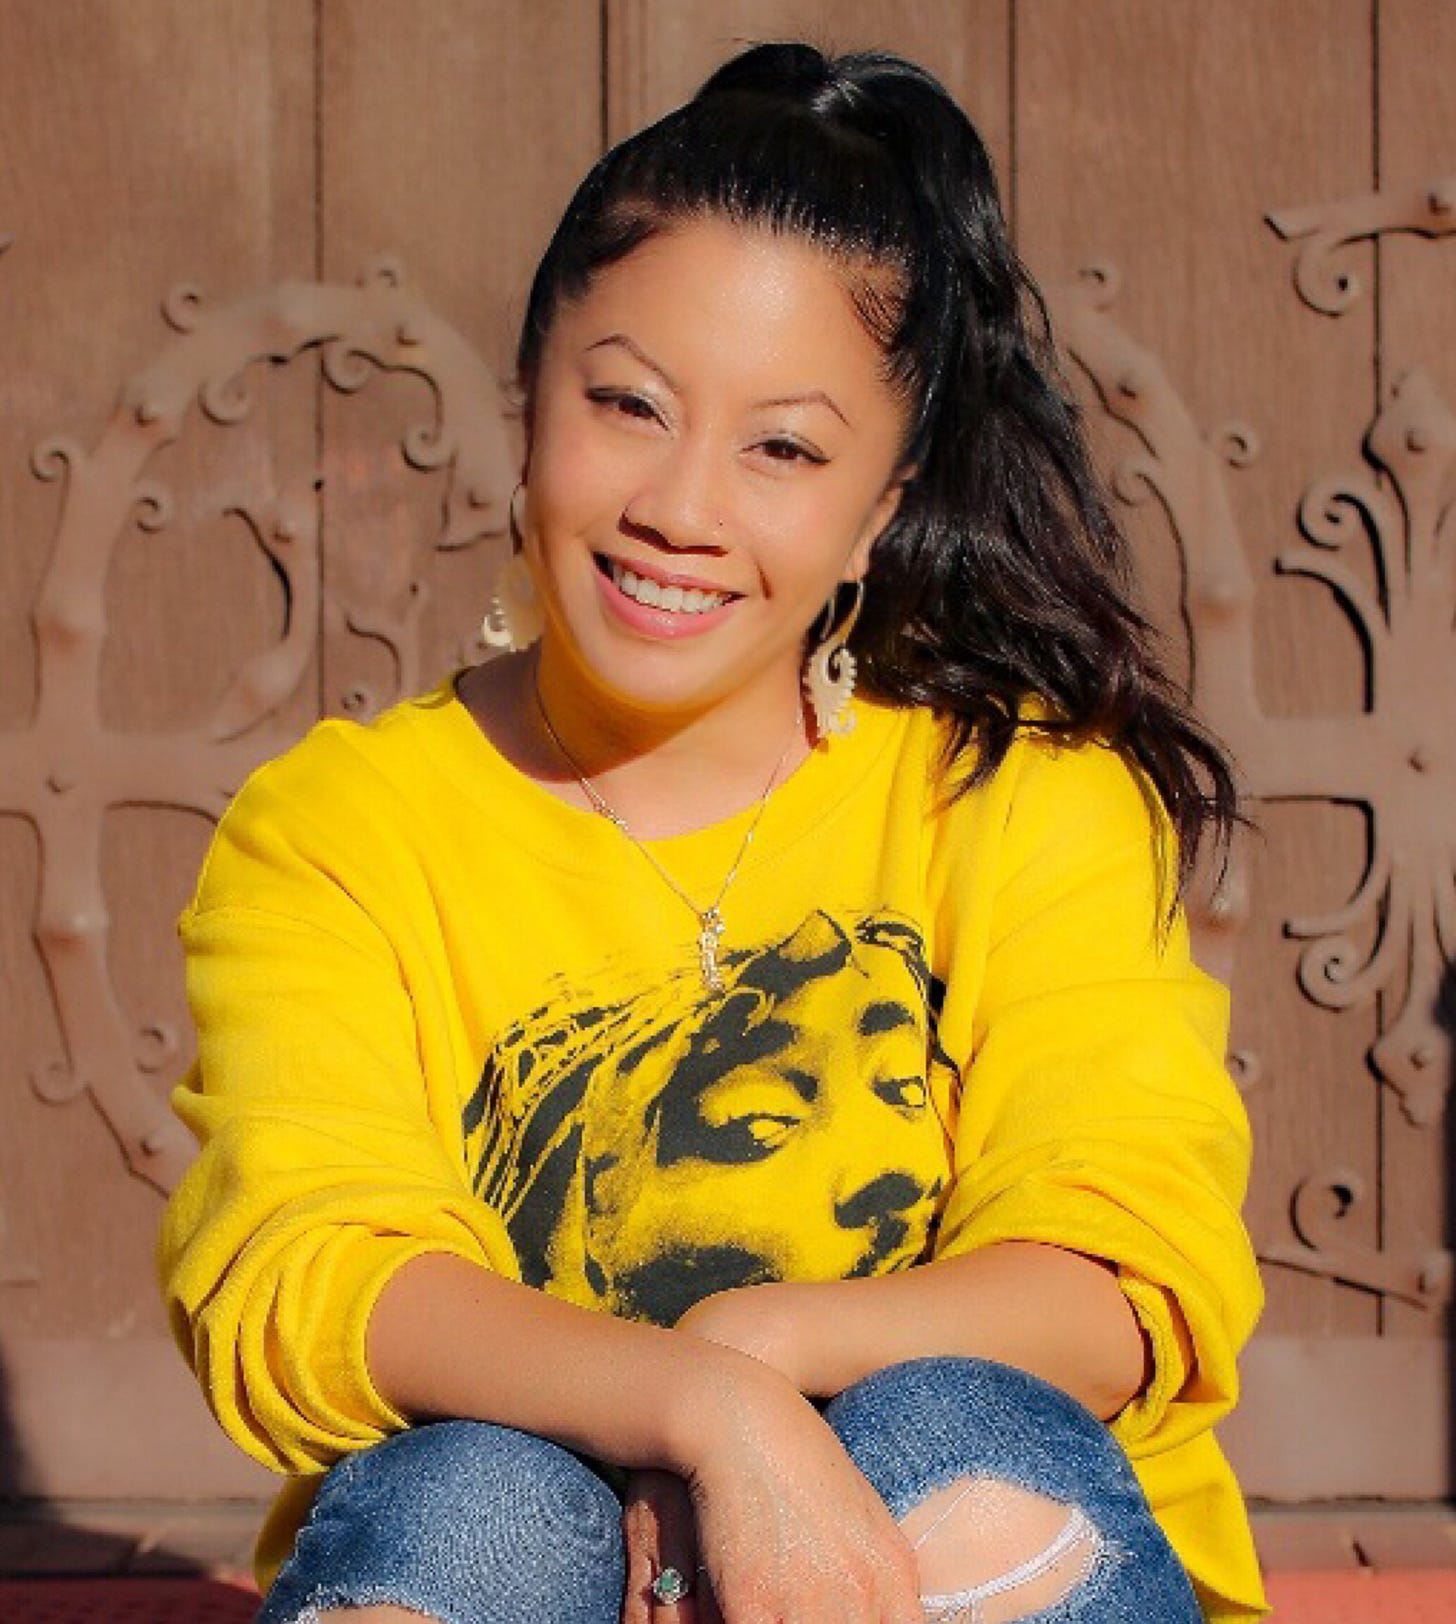 Nicole smiling, hair in a high ponytail, wearing yellow sweatshirt with Tupac Shakur image